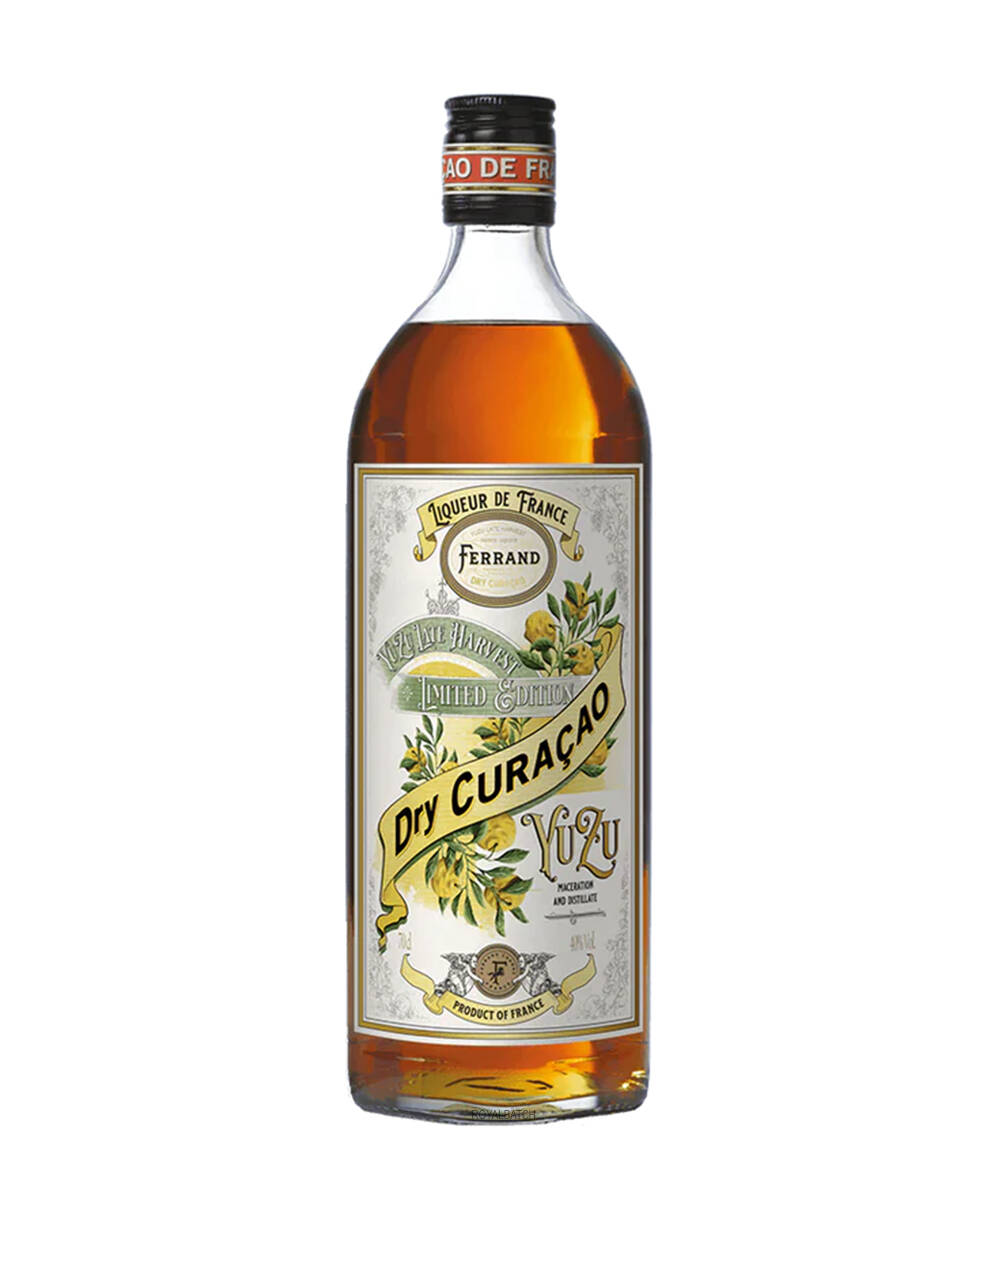 Ferrand Dry Curacao Yuzu Late Harvest Liqueur